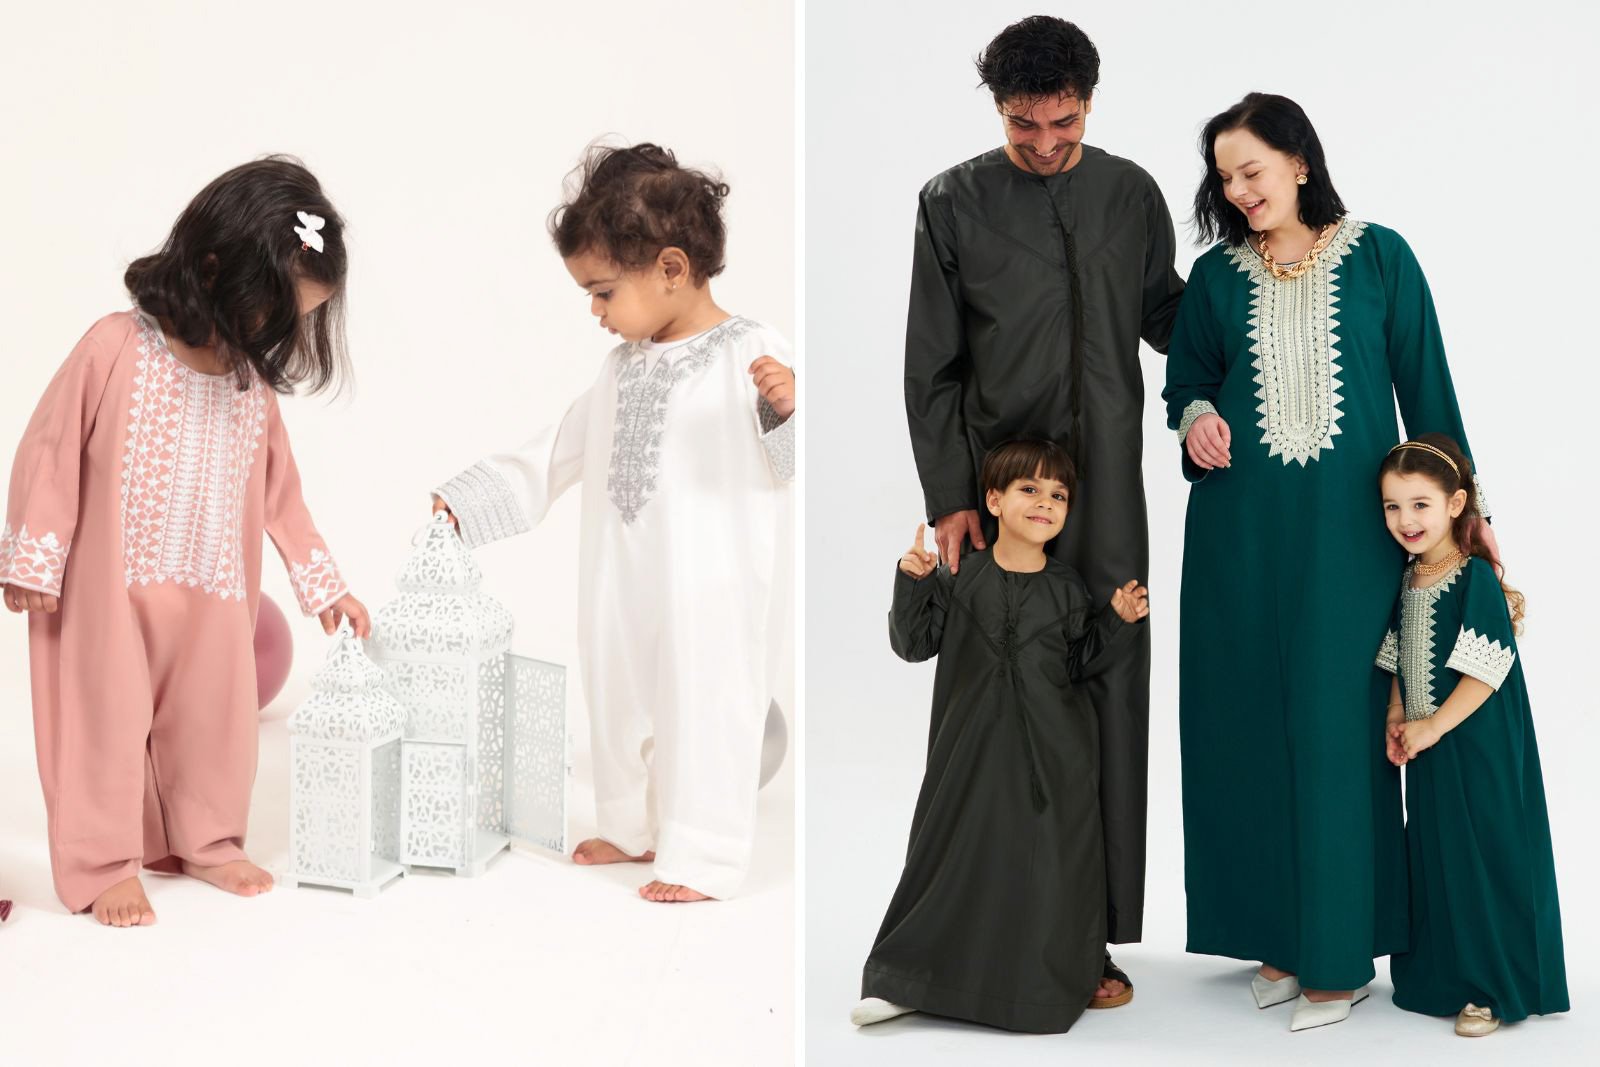 Eid children's fashion photographs courtesy of Yalla Kids